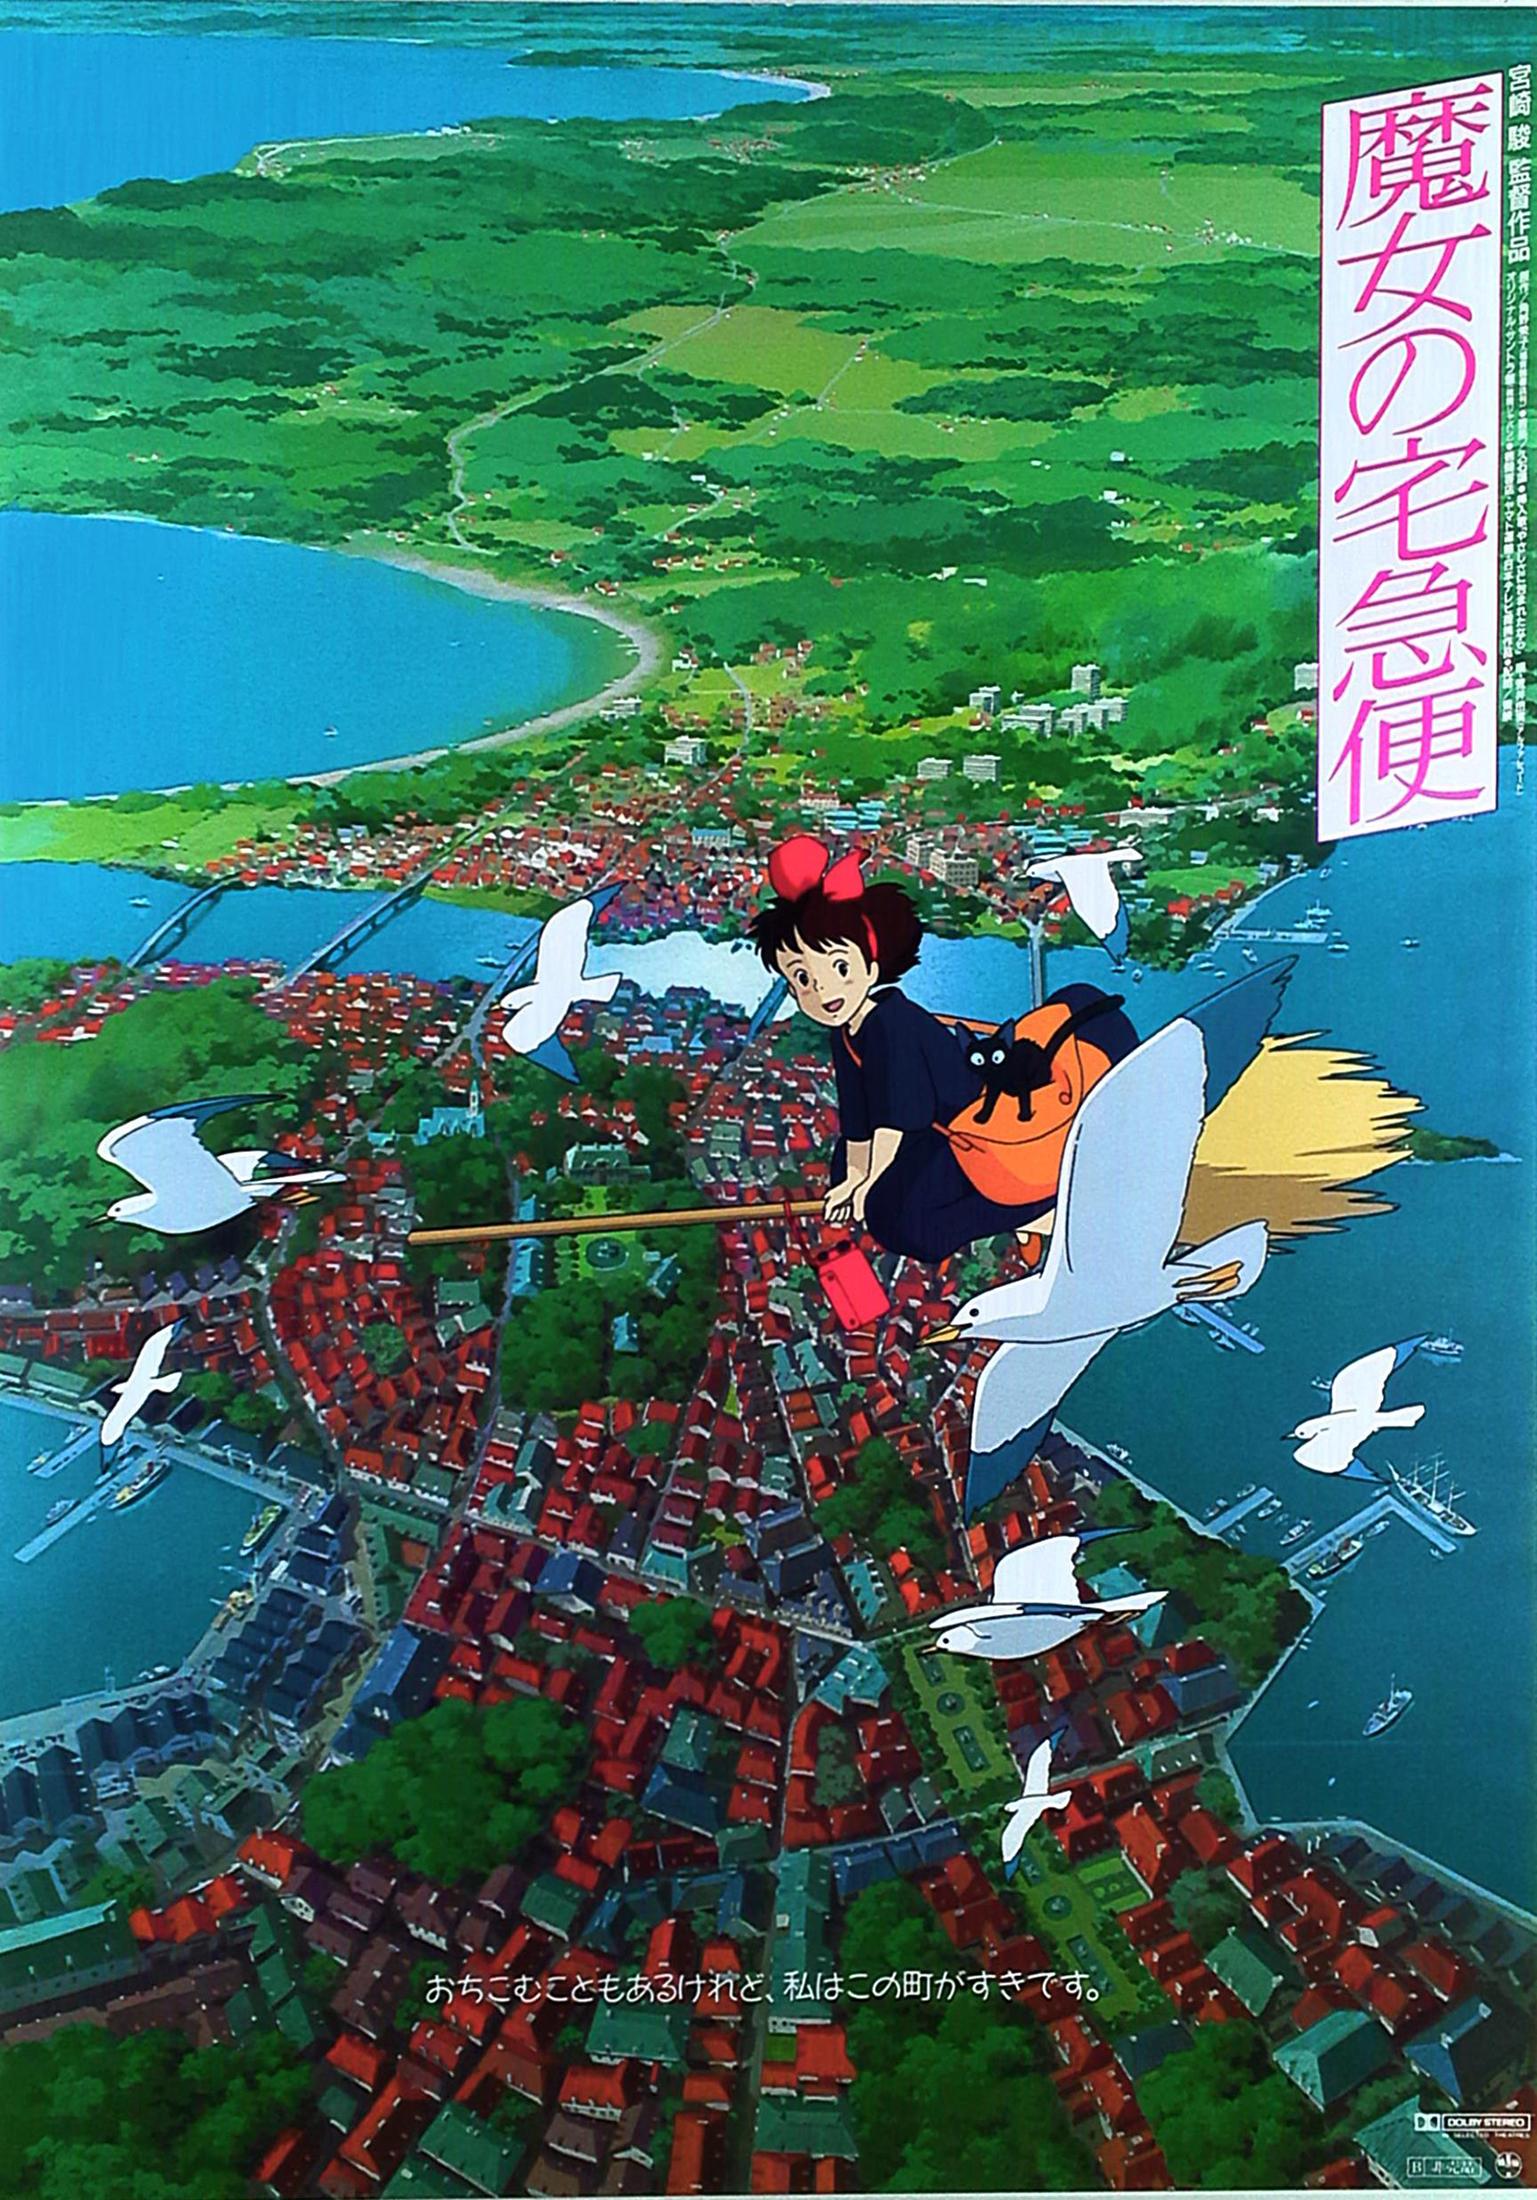 Kiki's Delivery Service Original Large Vintage Poster, Miyazaki, Studio Ghibli - Print by Unknown